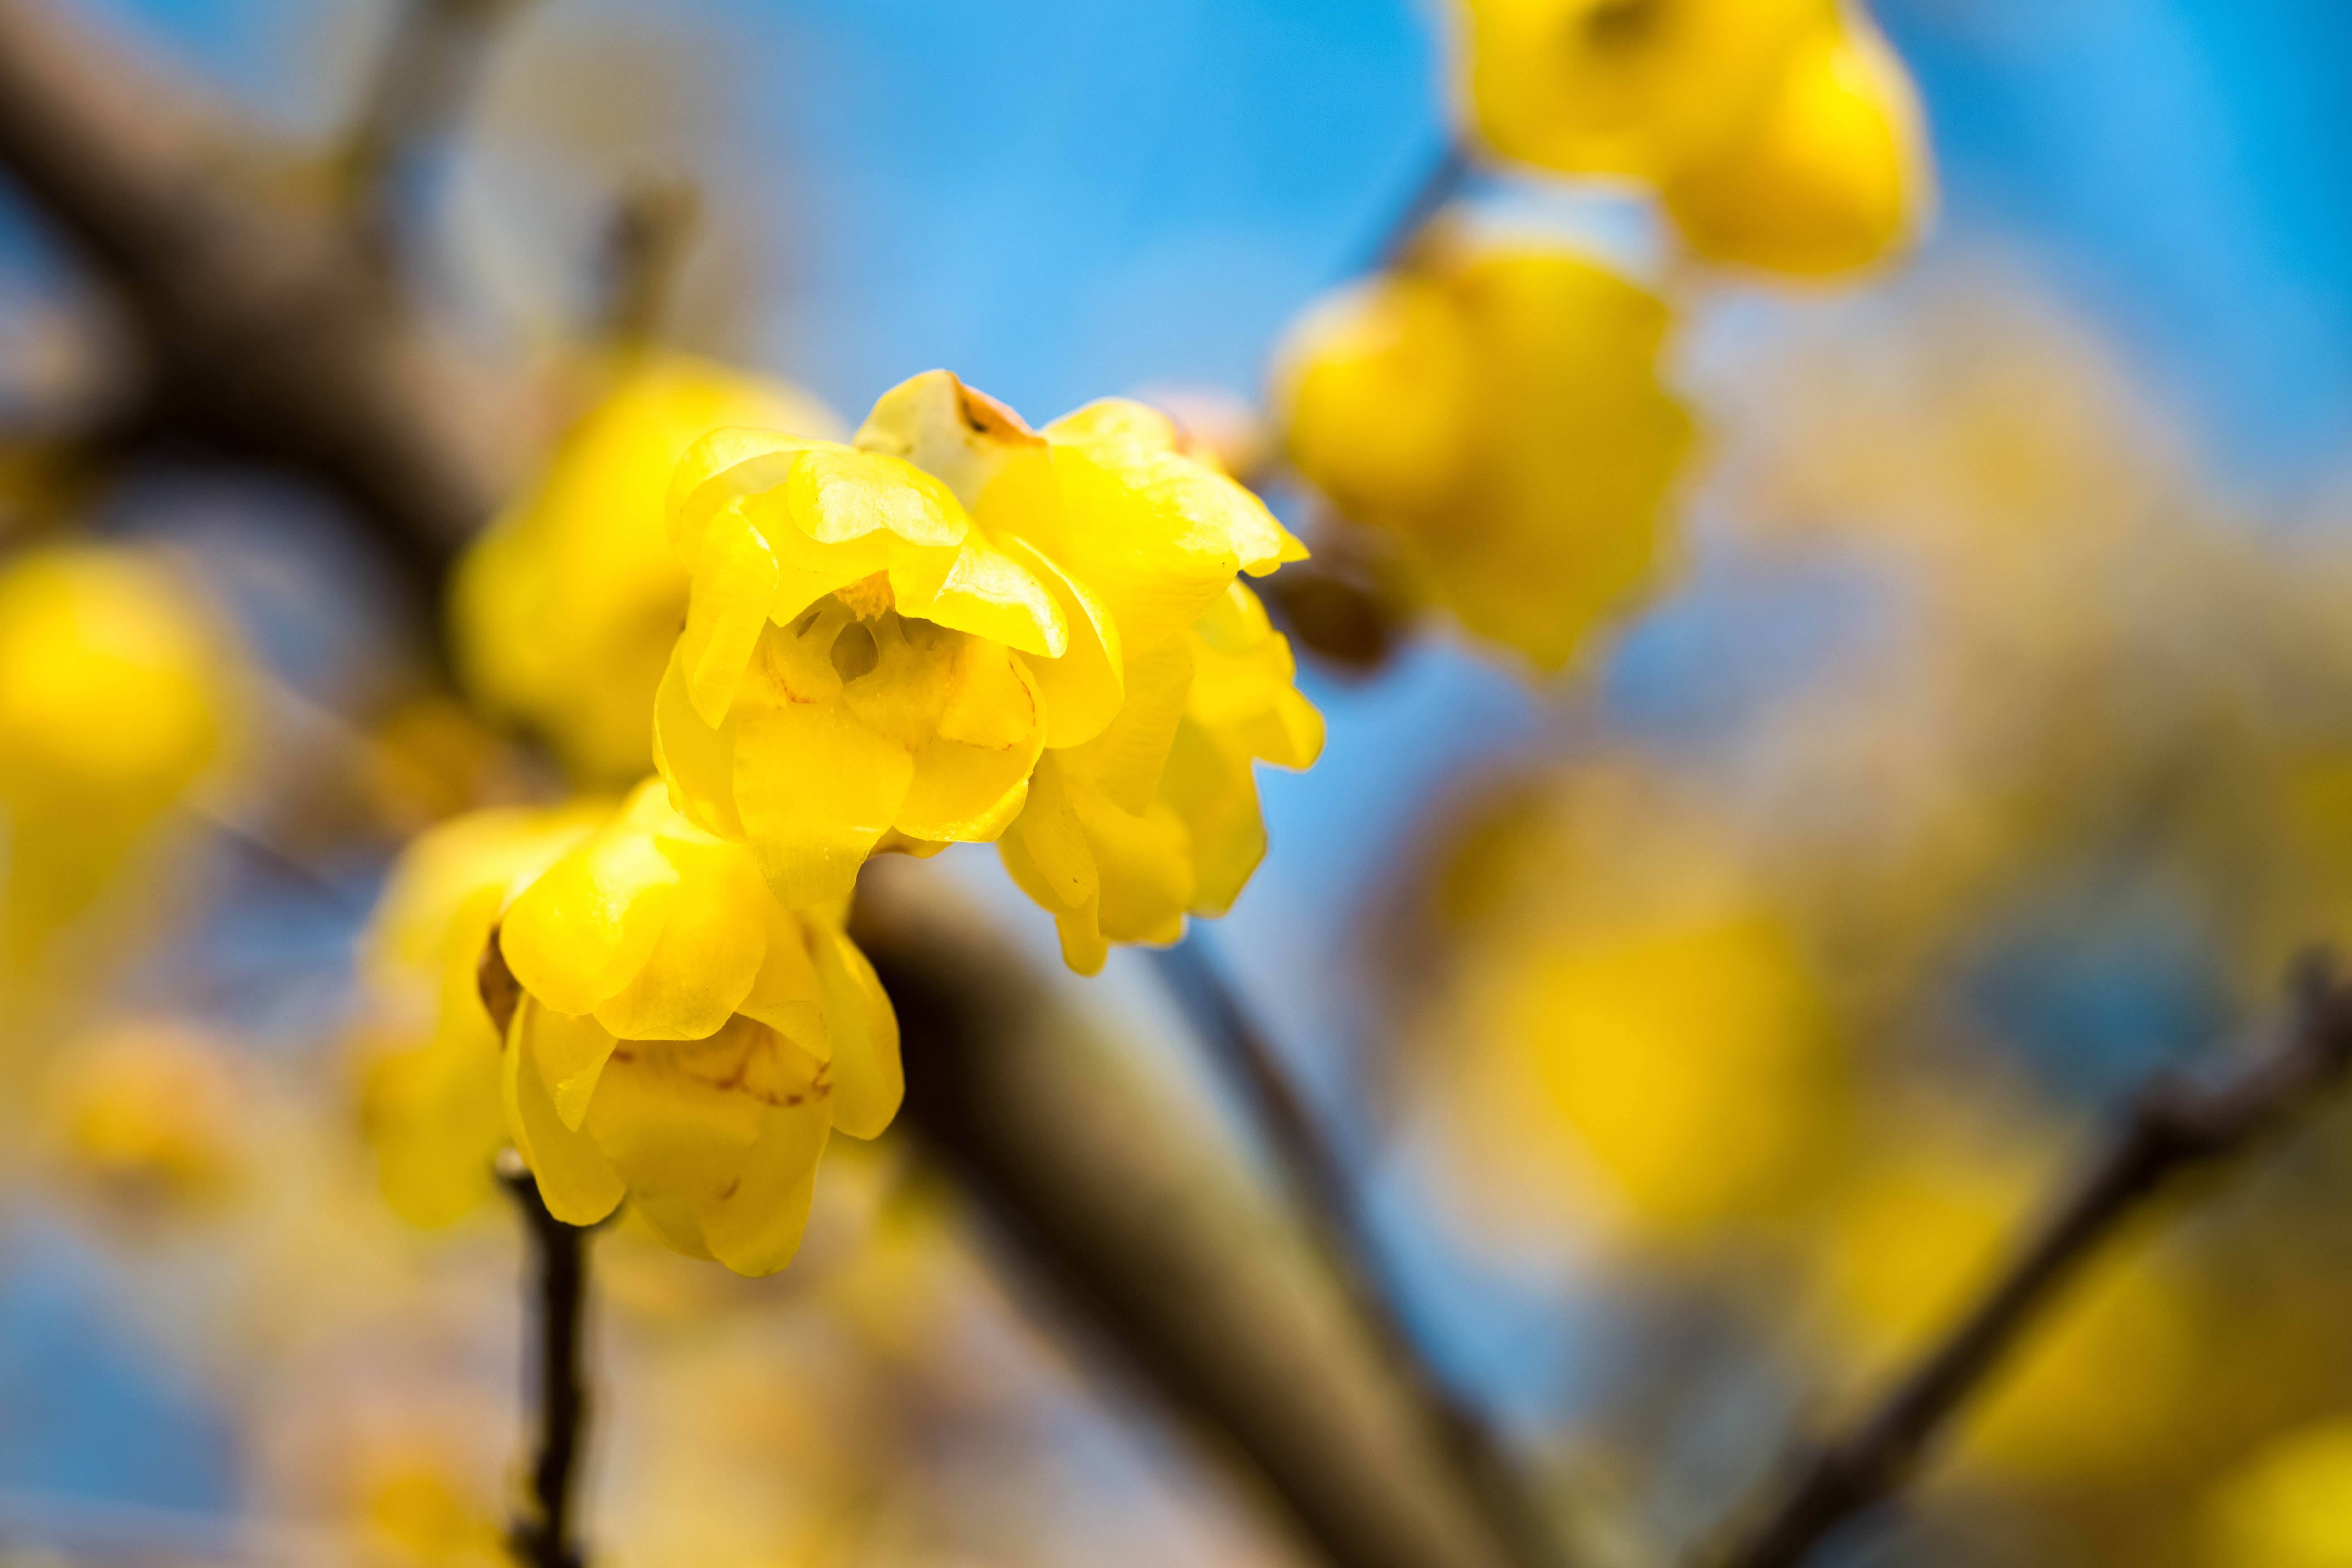 wintersweet flower in full bloom, yellow chimonanthus fragrans in cold winter